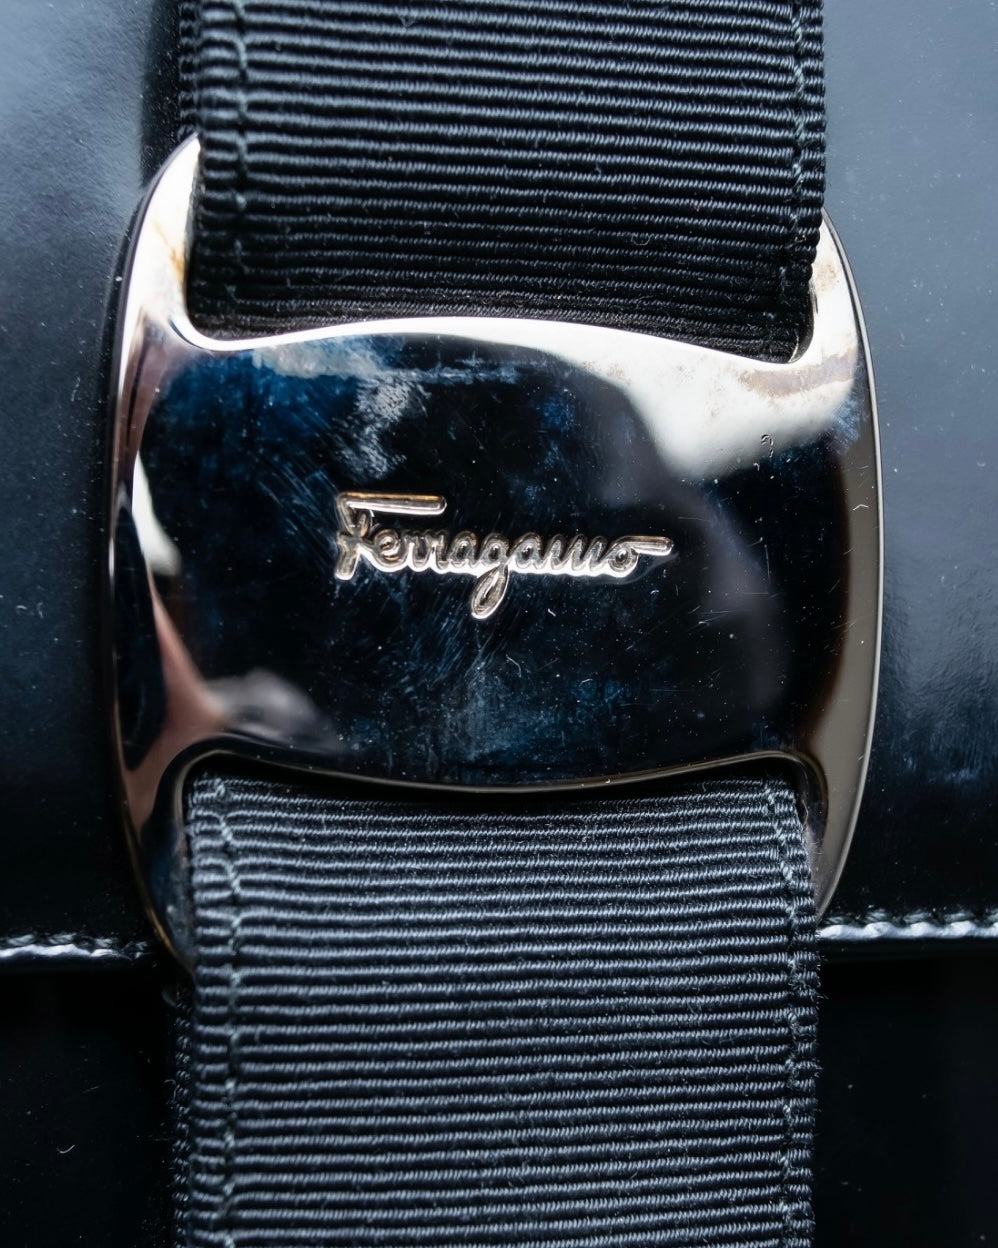 "Salvatore Ferragamo" enamel shoulder bag